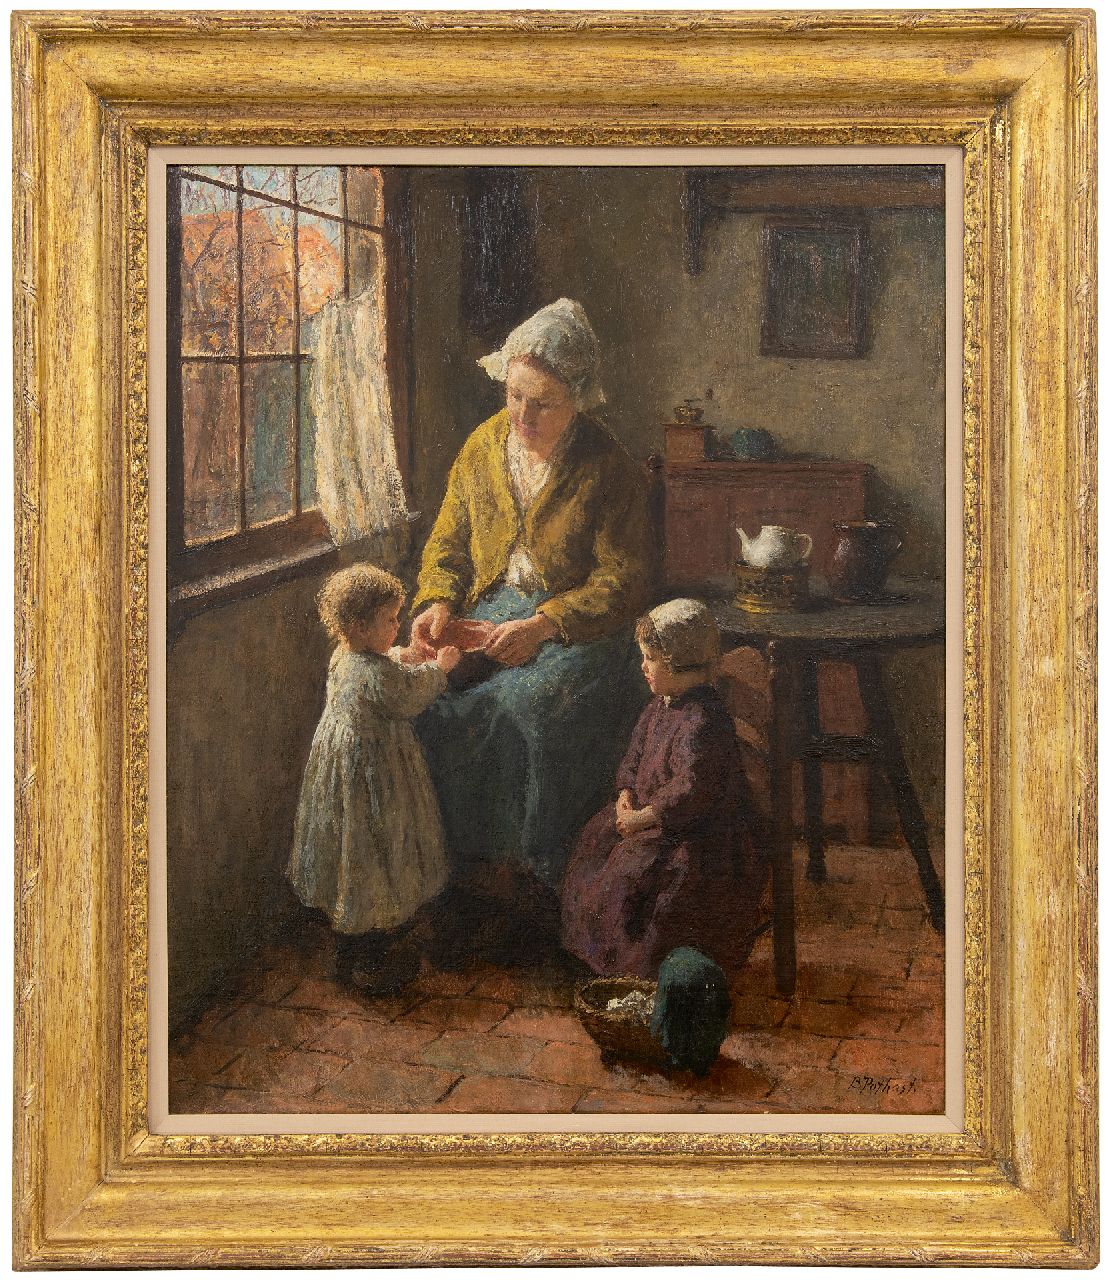 Pothast B.J.C.  | 'Bernard' Jean Corneille Pothast | Paintings offered for sale | Mother and her children in a Laren interior, oil on canvas 59.9 x 49.8 cm, signed l.r.